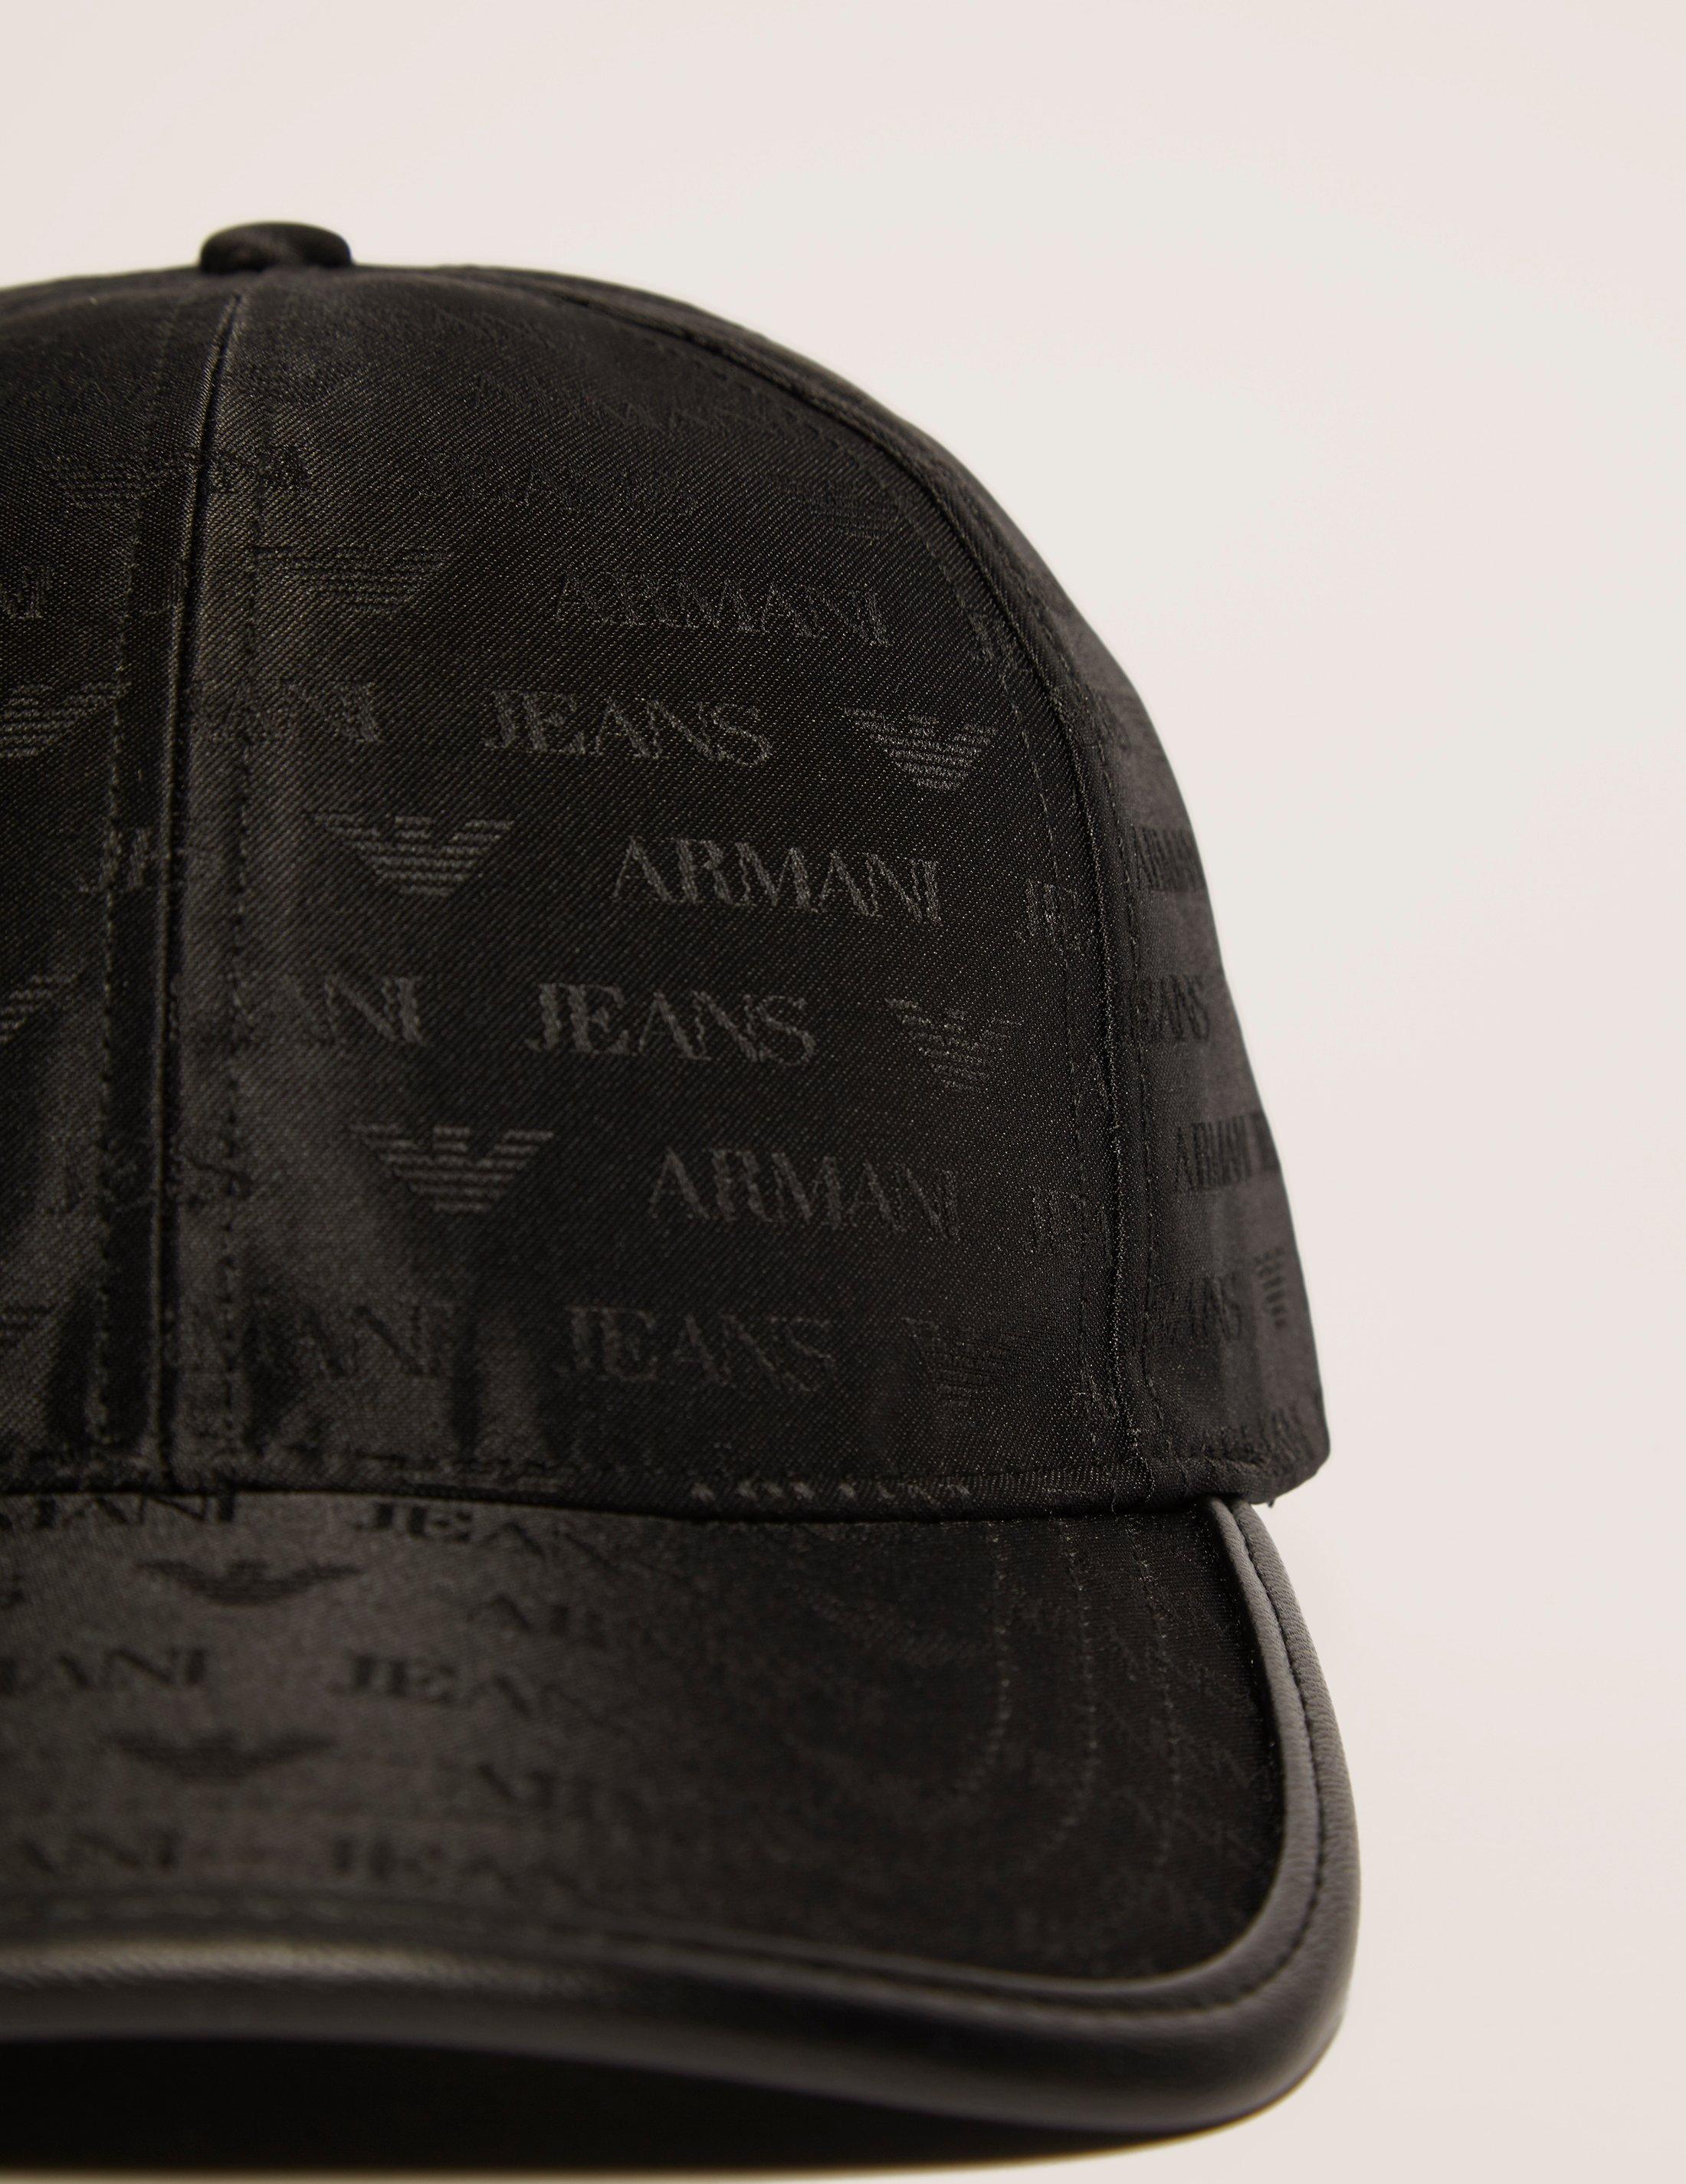 Armani Jeans Synthetic Nylon Print Cap in Black for Men - Lyst